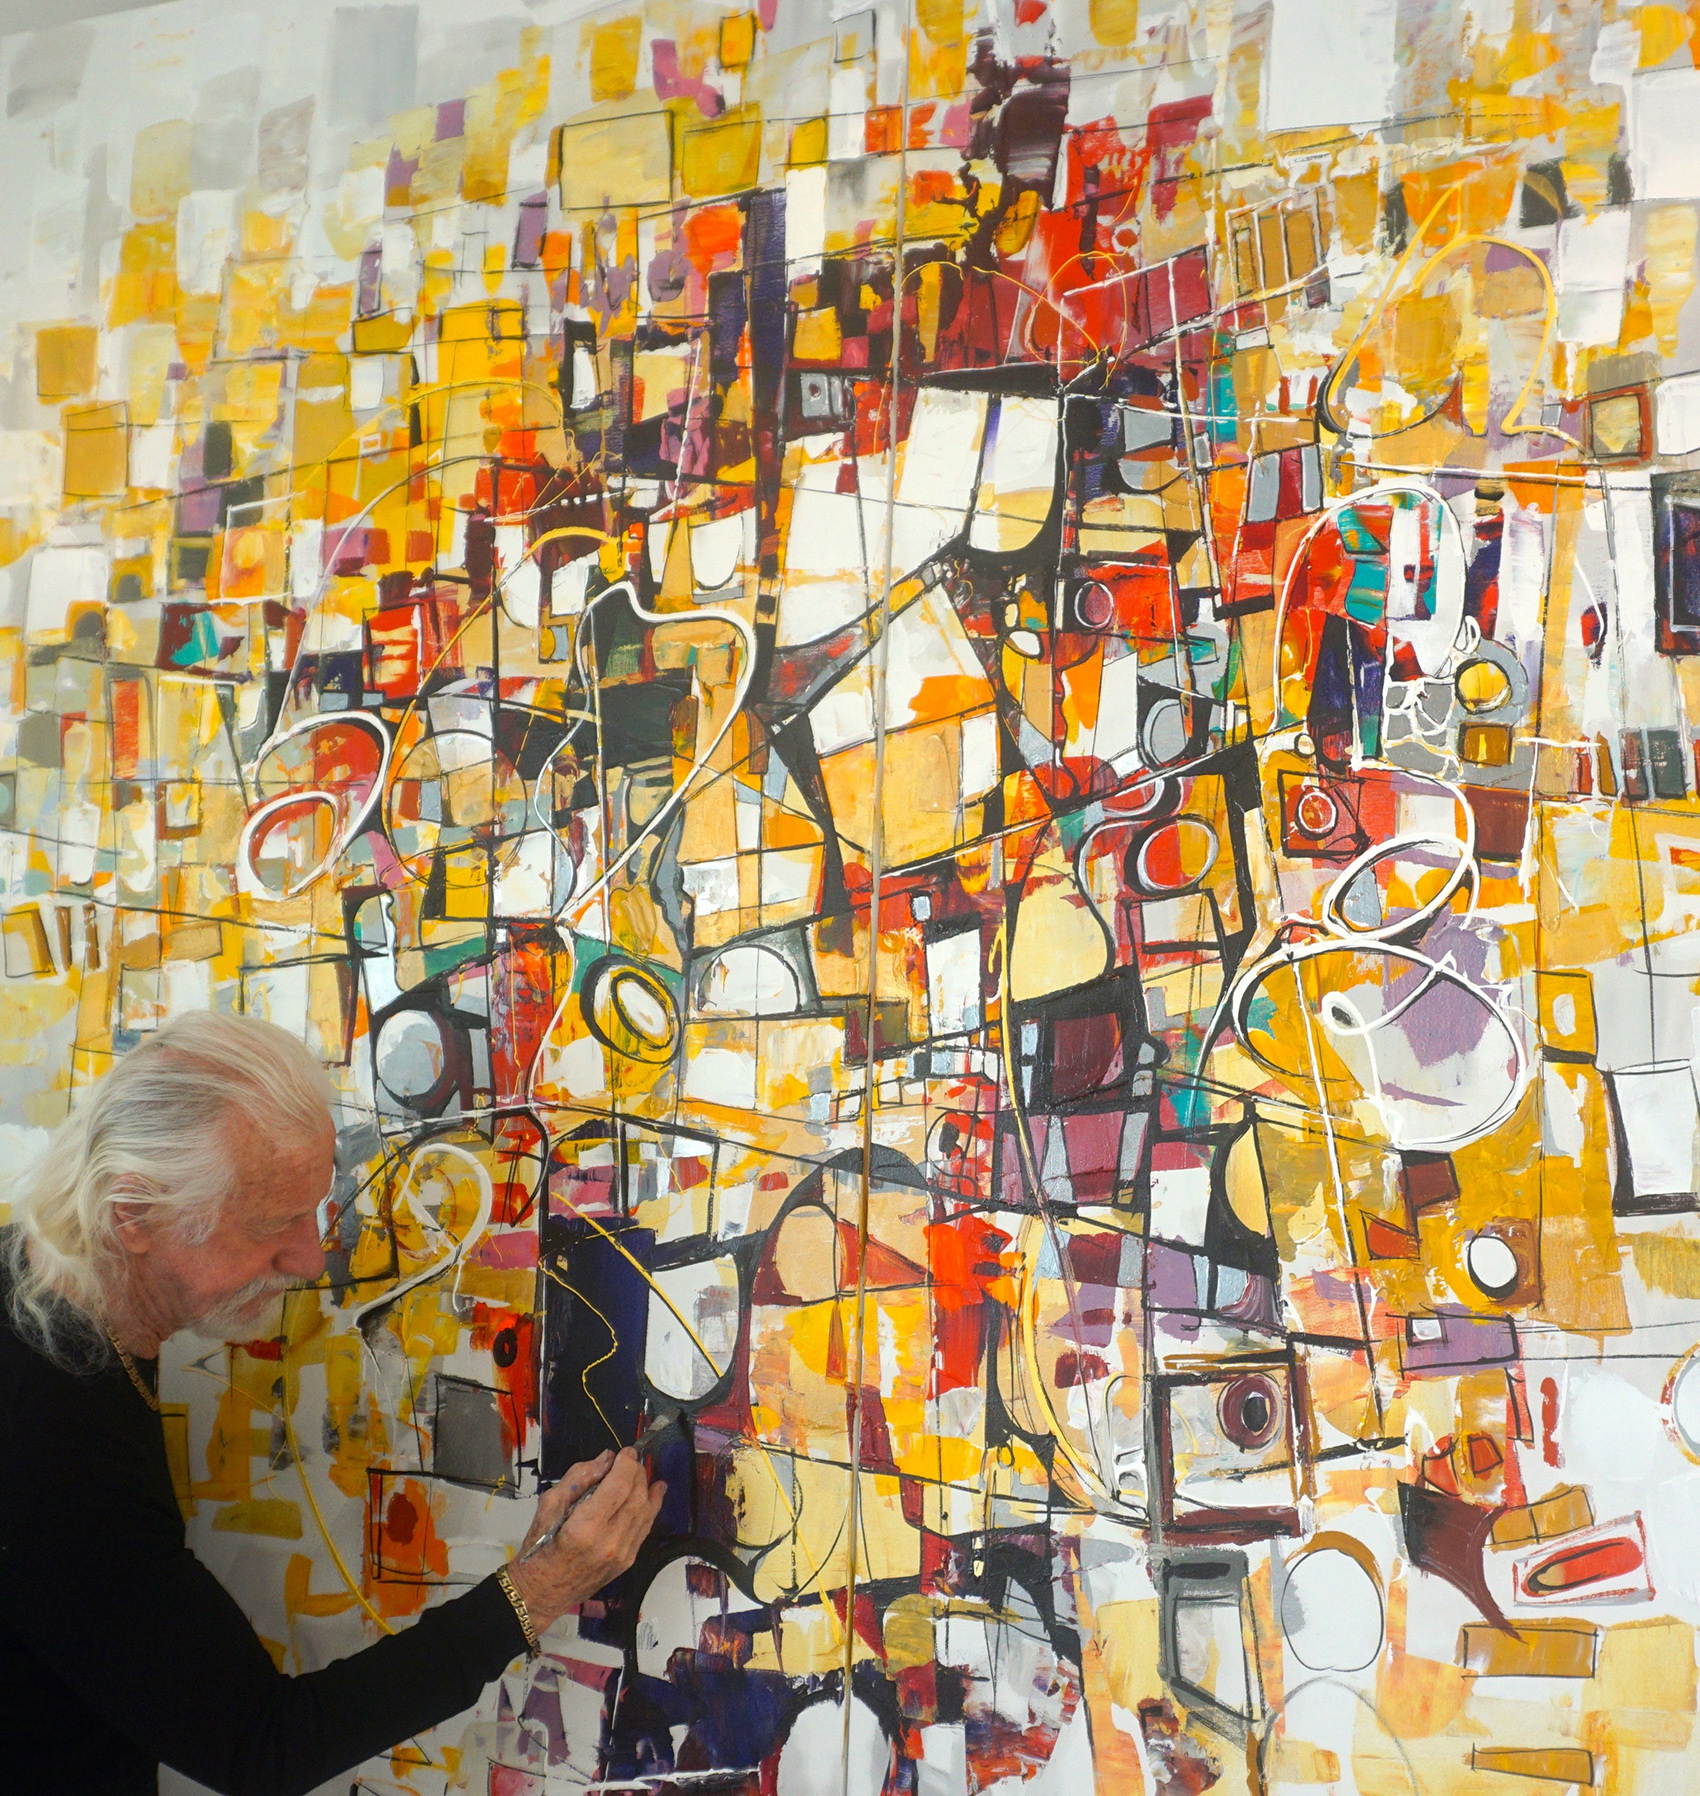 Paul Ygartua painting abstract art in his studio